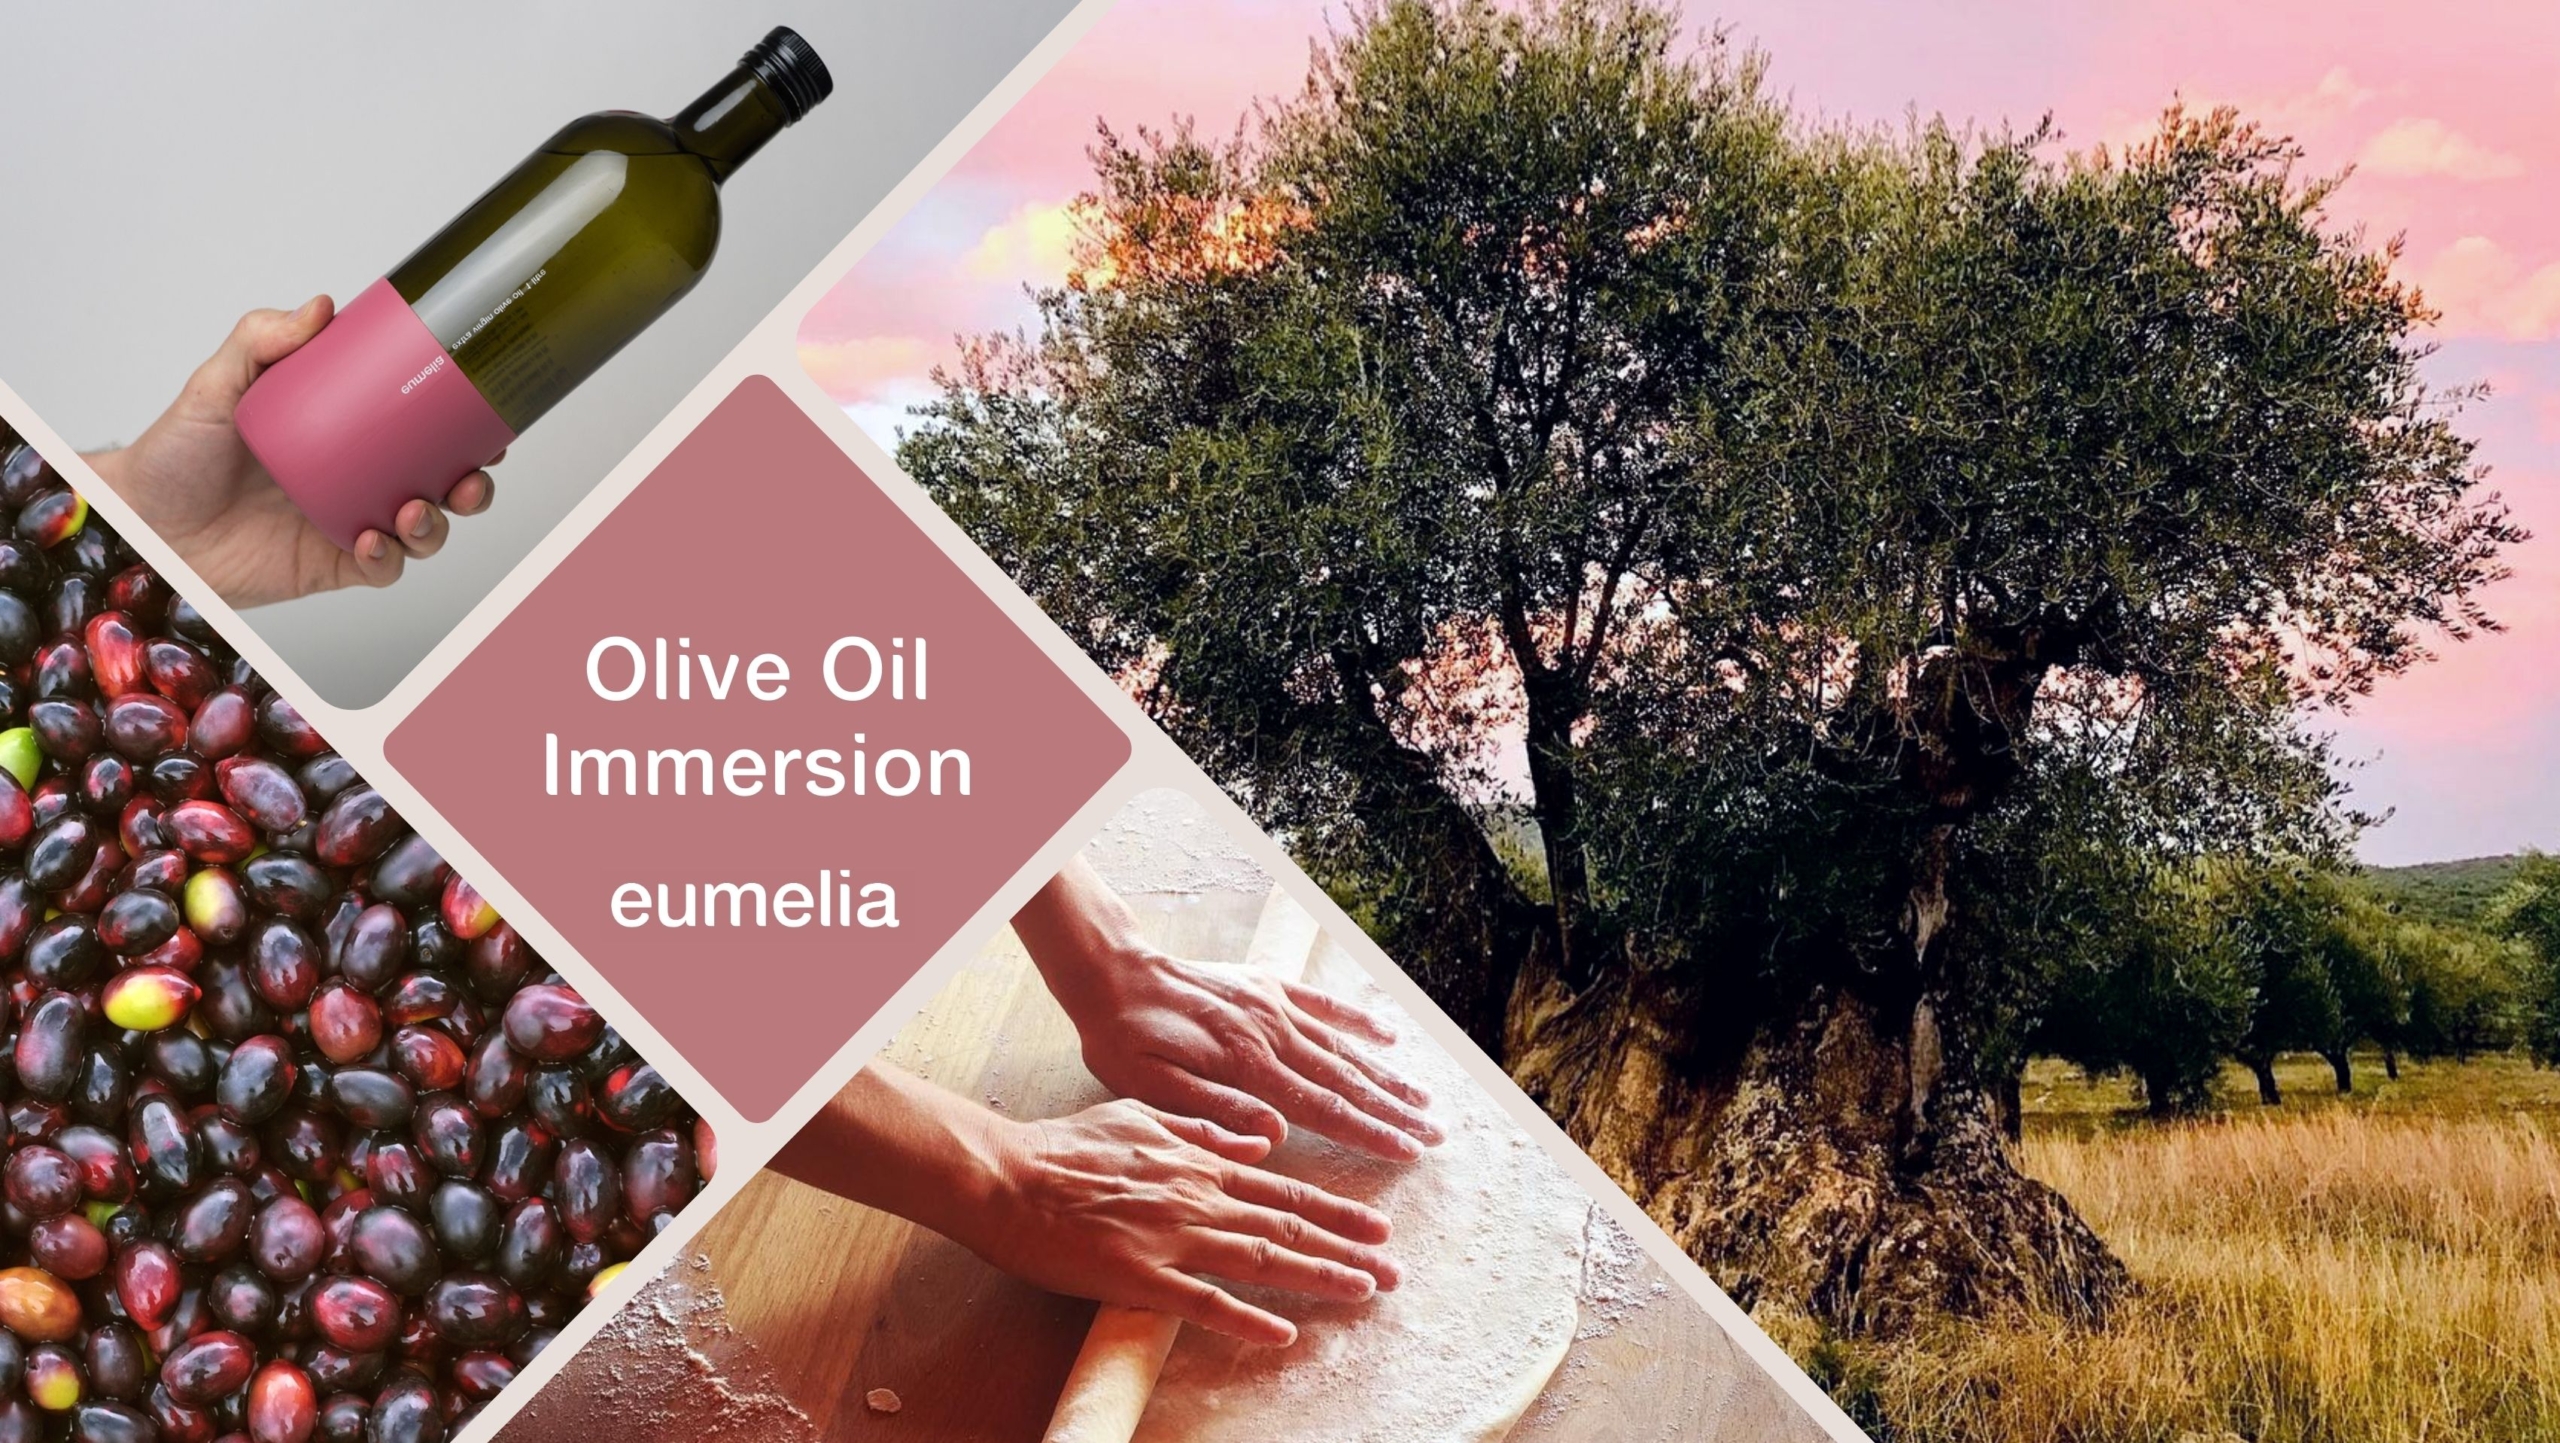 eumelia olive oil immersion tour